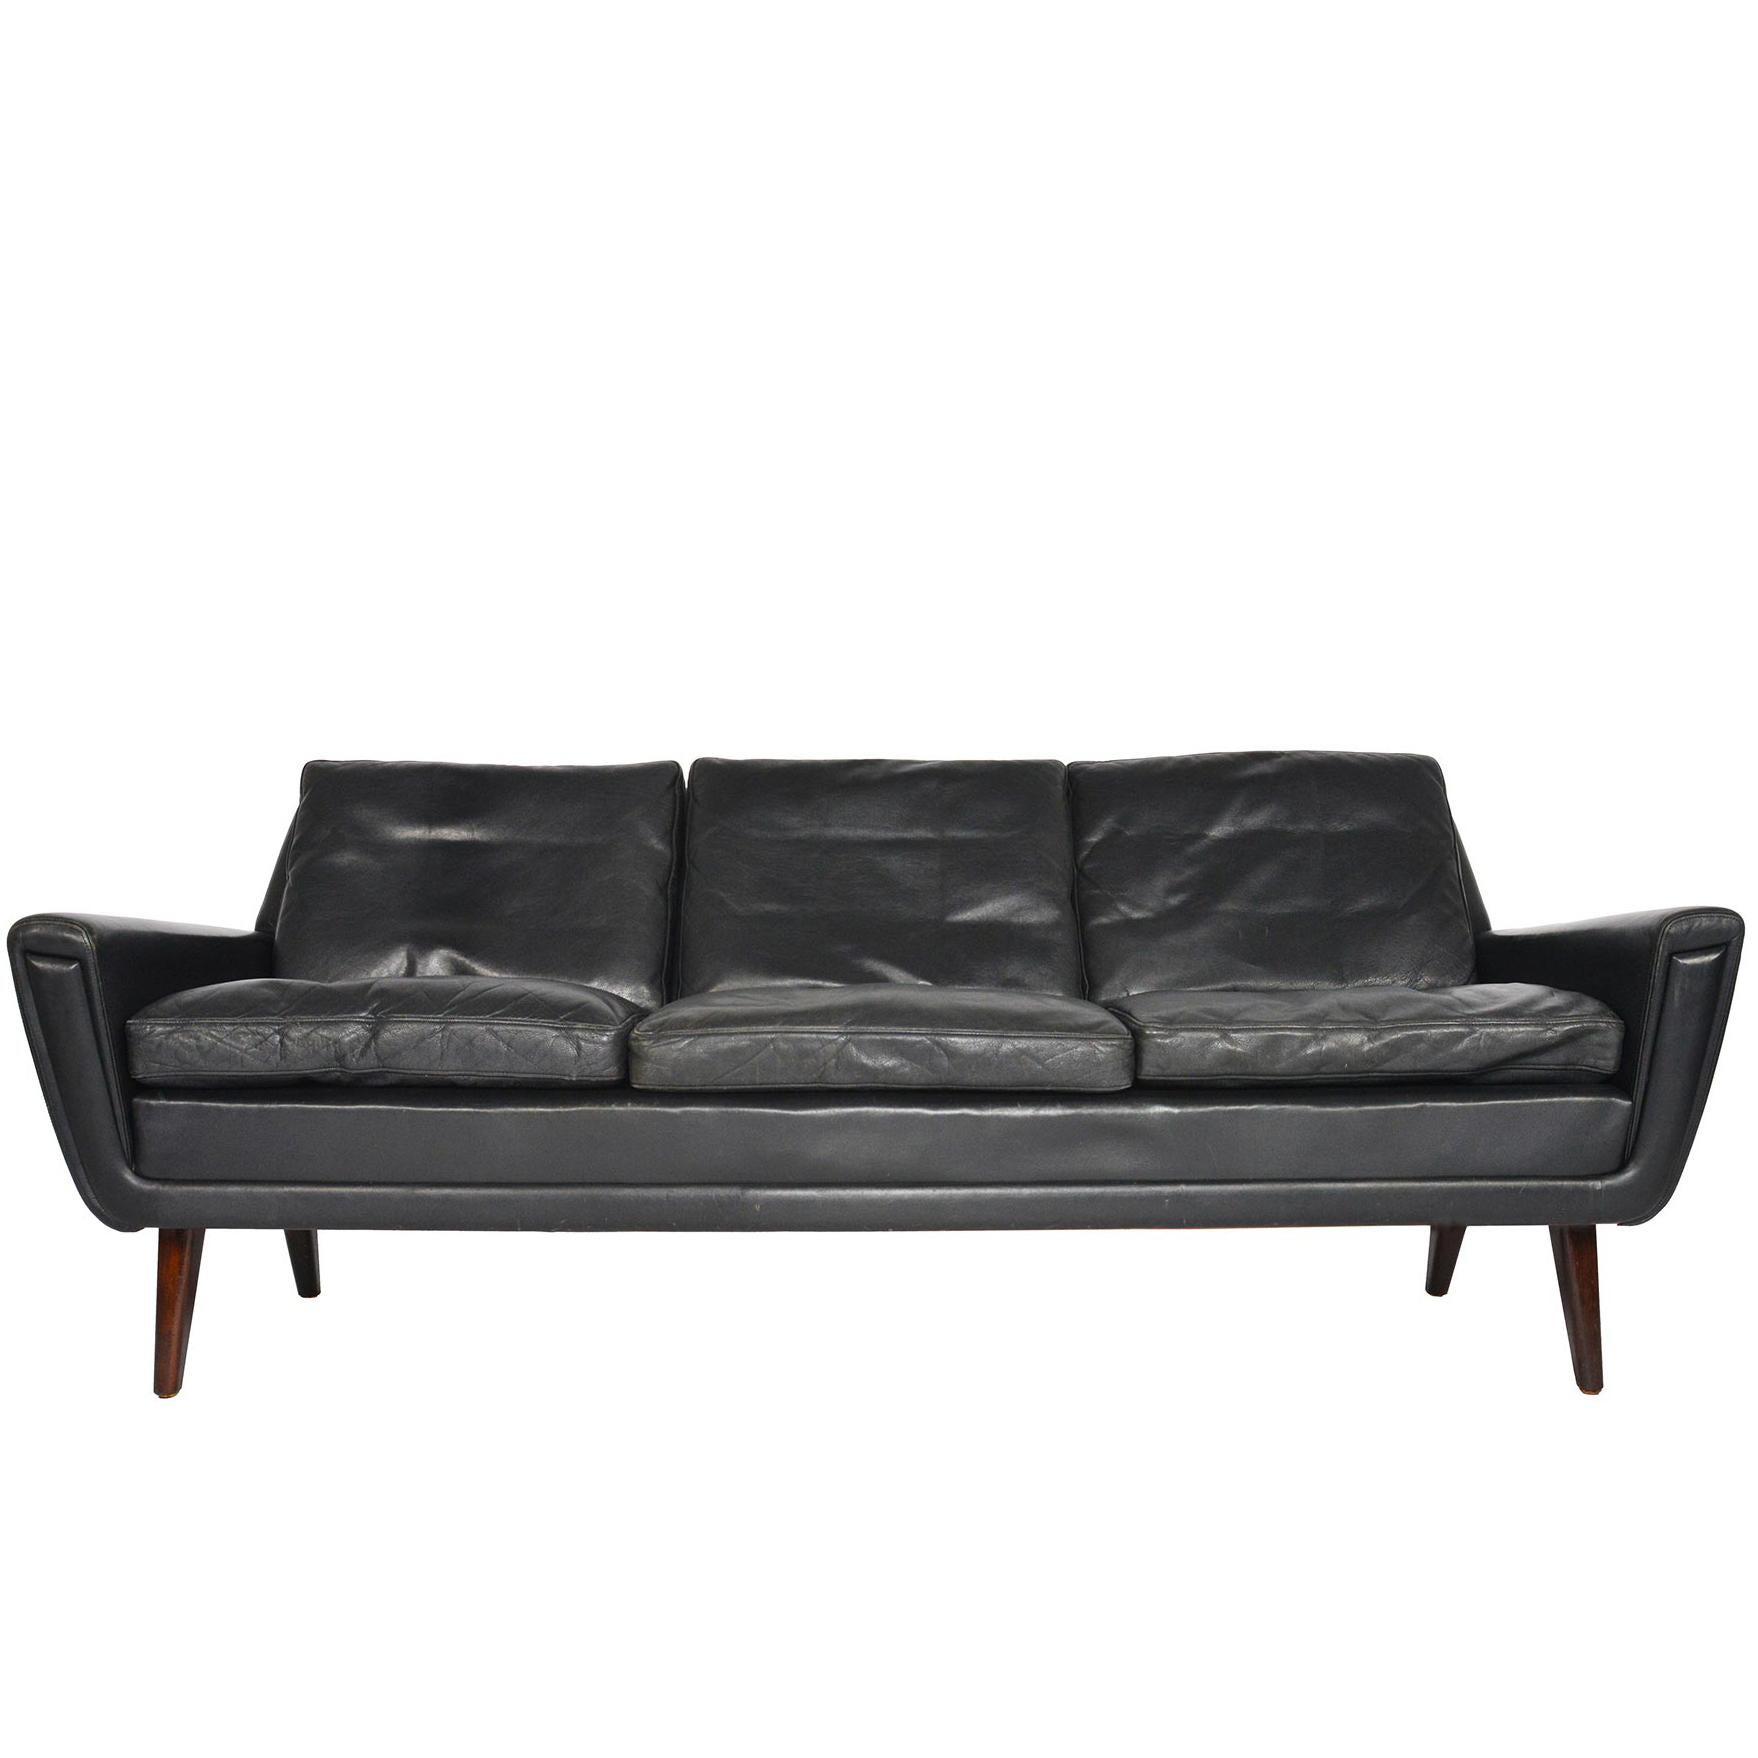 Danish Modern Atomic Black Leather Three-Seat Sofa